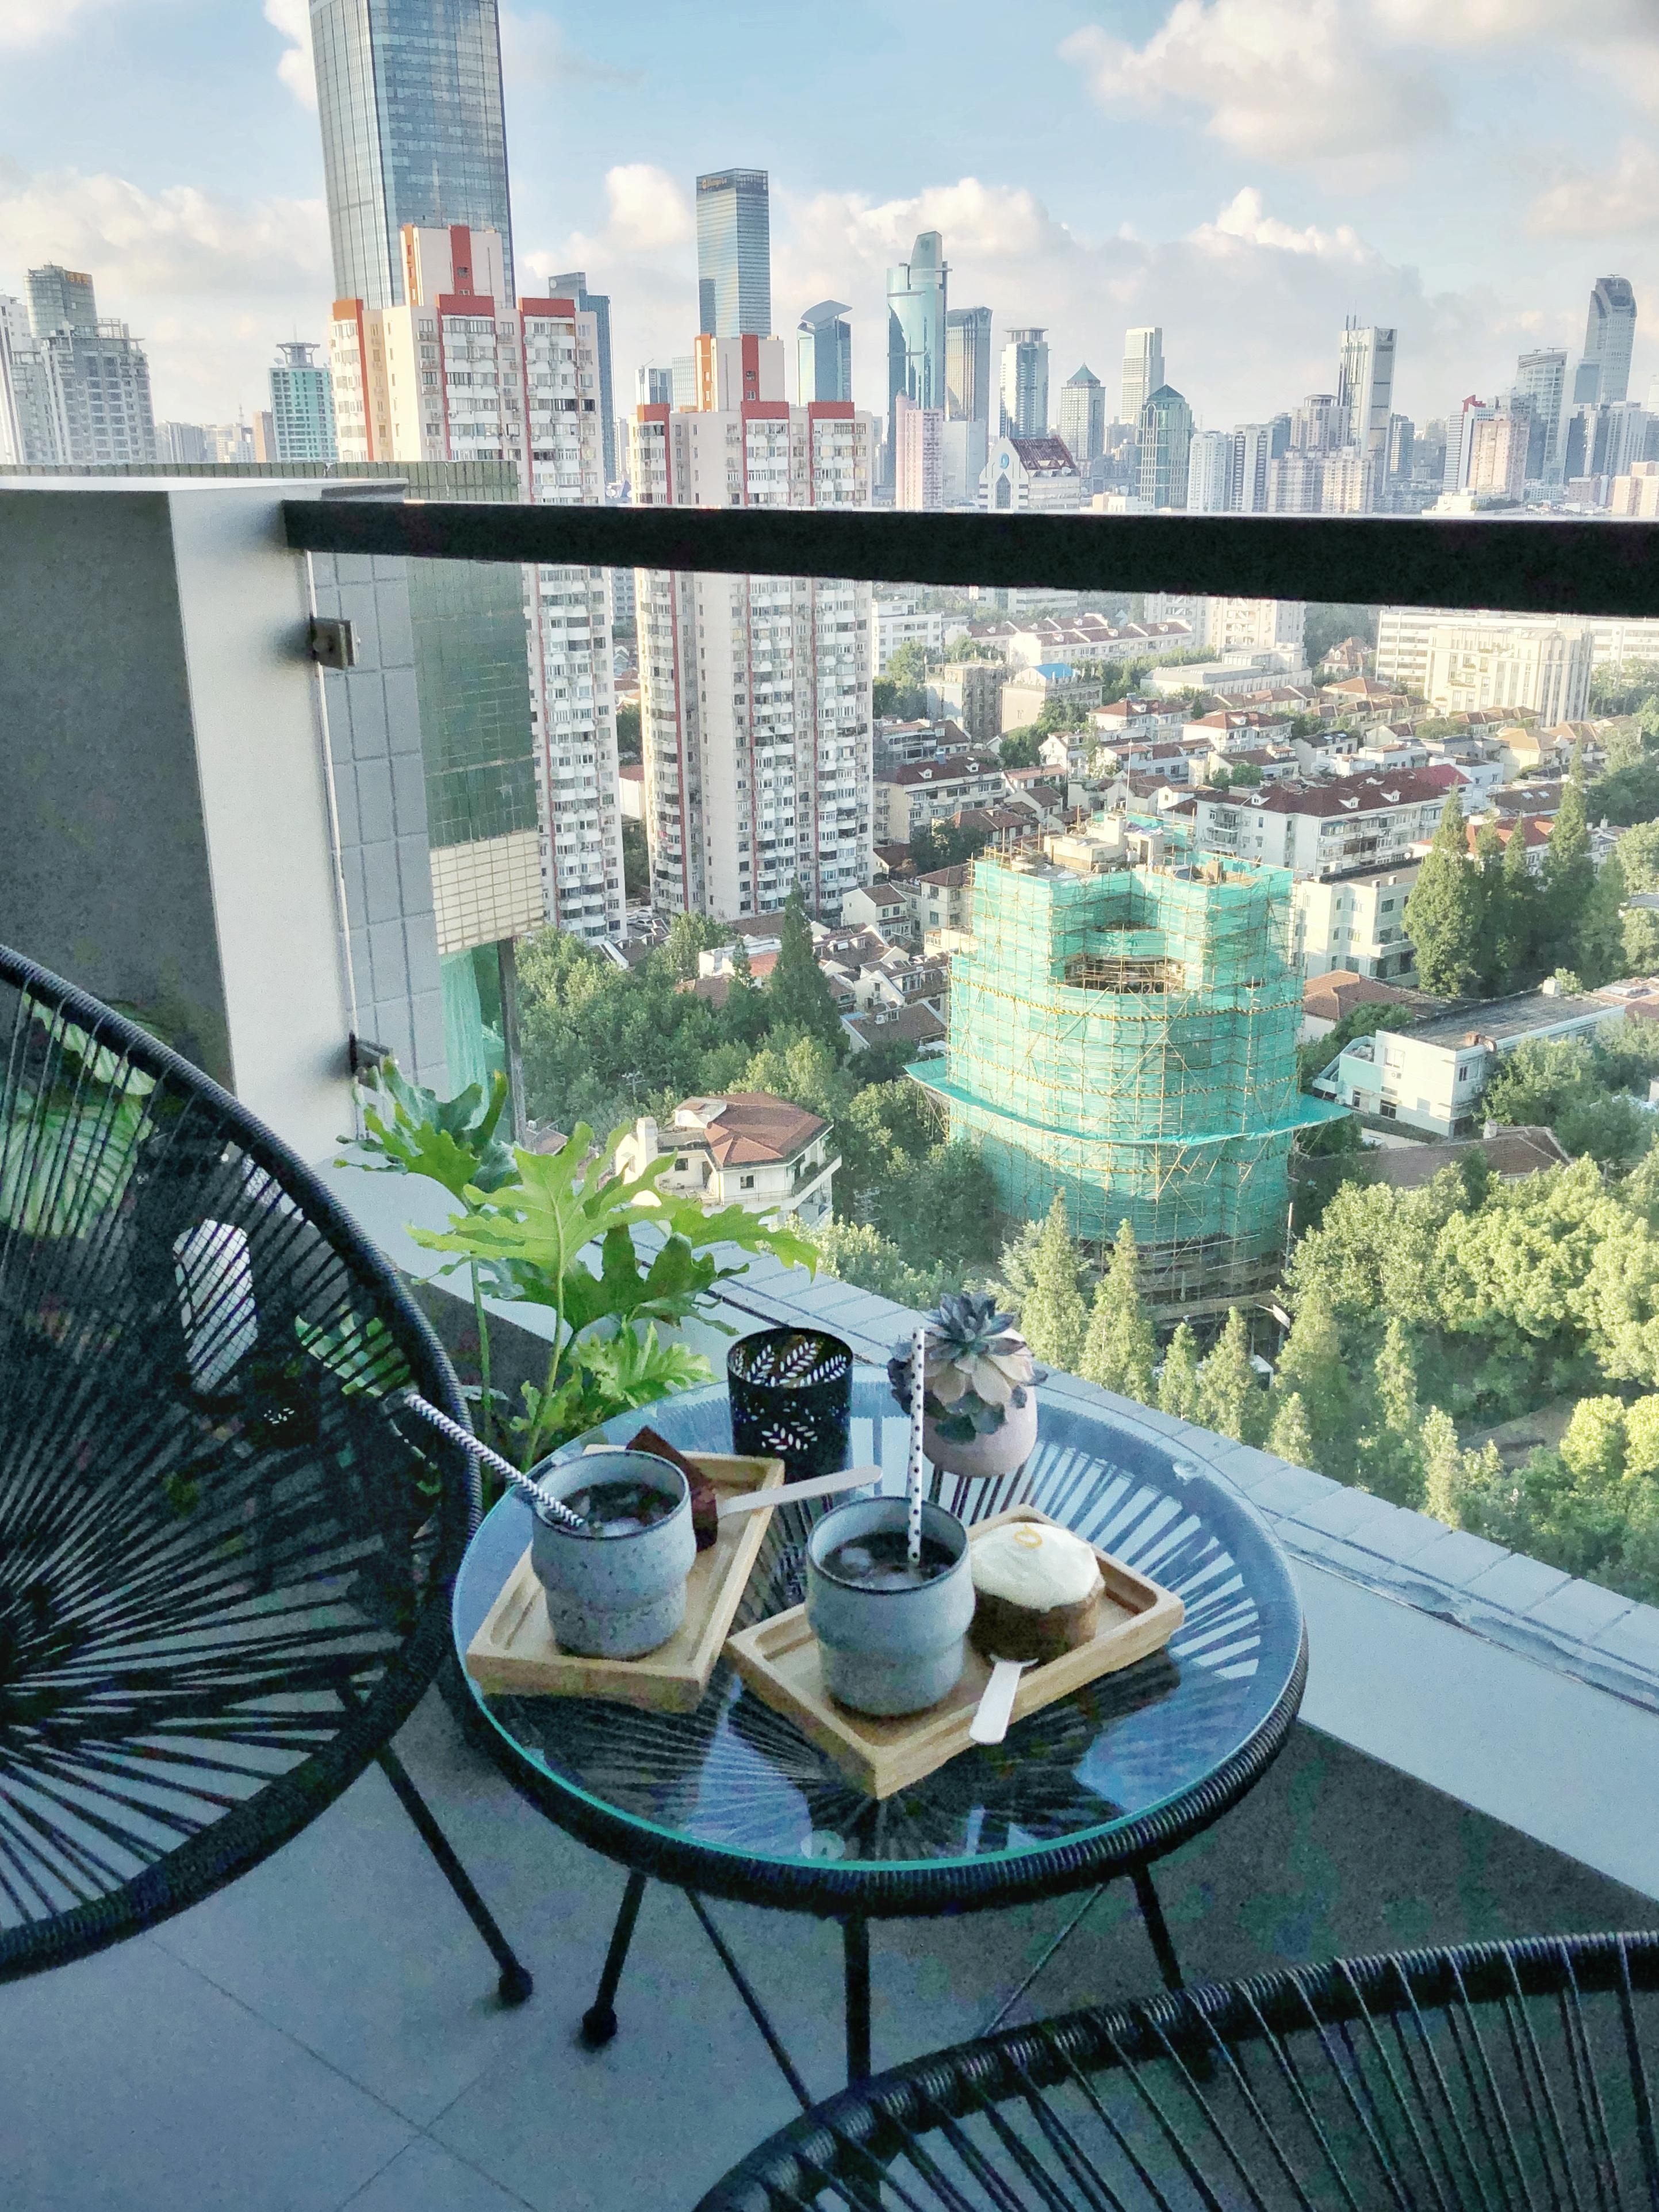 Coffeetime in Shanghai
#butfirstcoffee#coffeetime#cake#acapulcochair#vwie